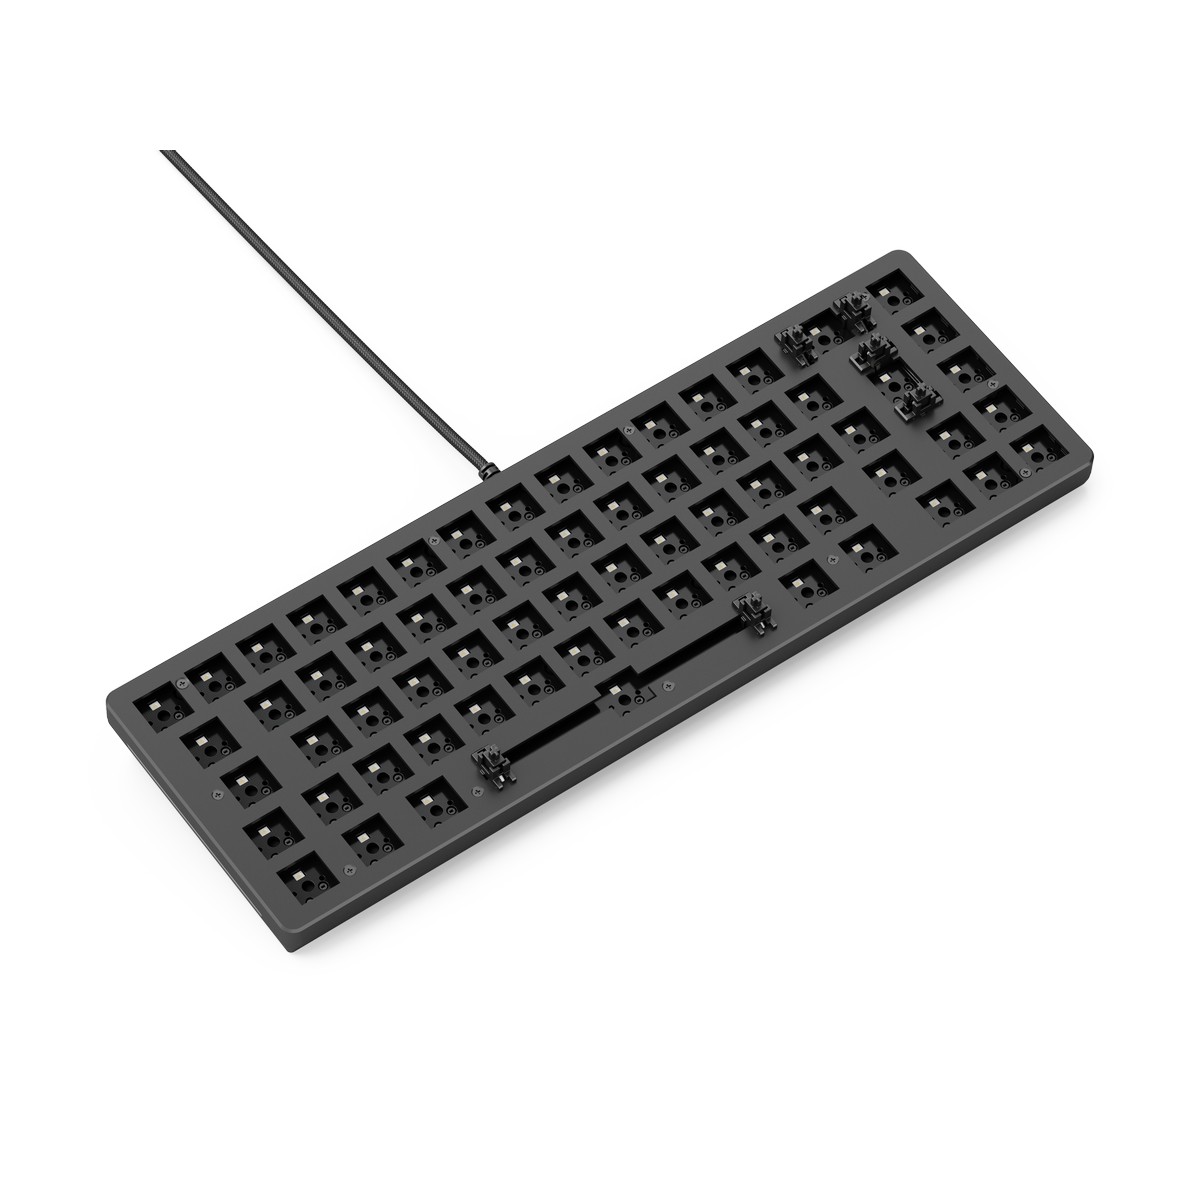 Glorious GMMK 2 65% Keyboard Barebone ISO-Layout - Black